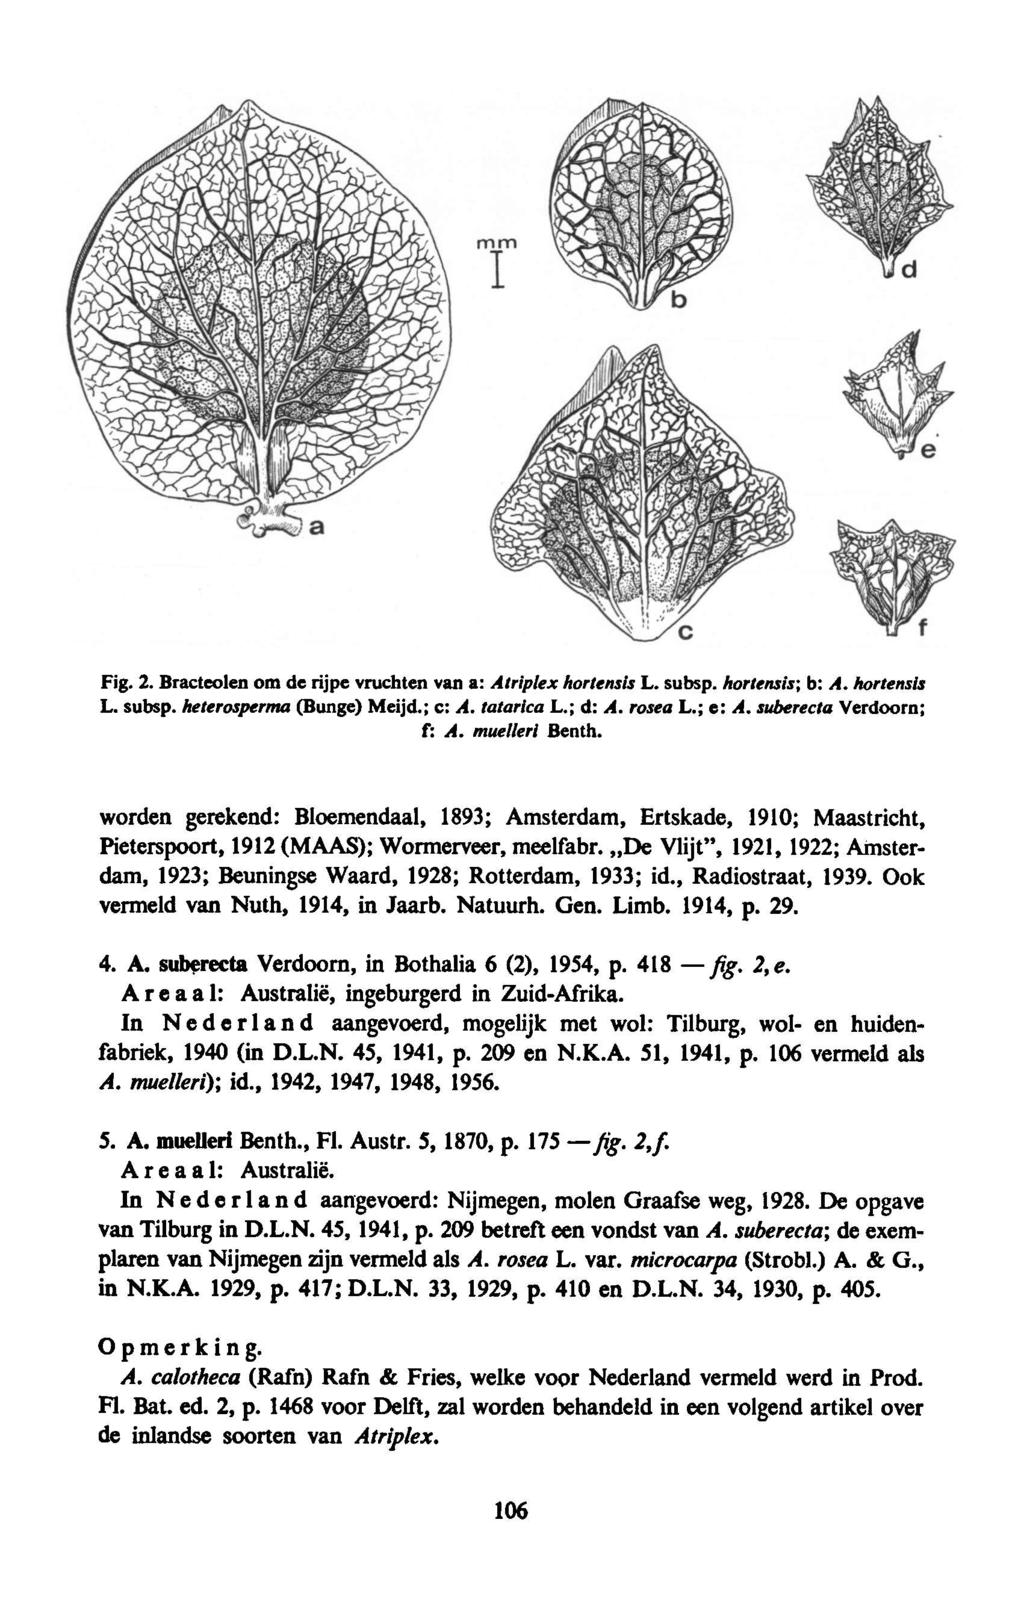 Fig 2 Bracteolen om de rijpe vruchten van a: Atriplex hortensis L subsp hortensis; b: A hortensis L c: subsp heterosperma(bunge) Meijd; A tatarica L; d: A rosea L; A e: suberecta Verdoorn; f: A